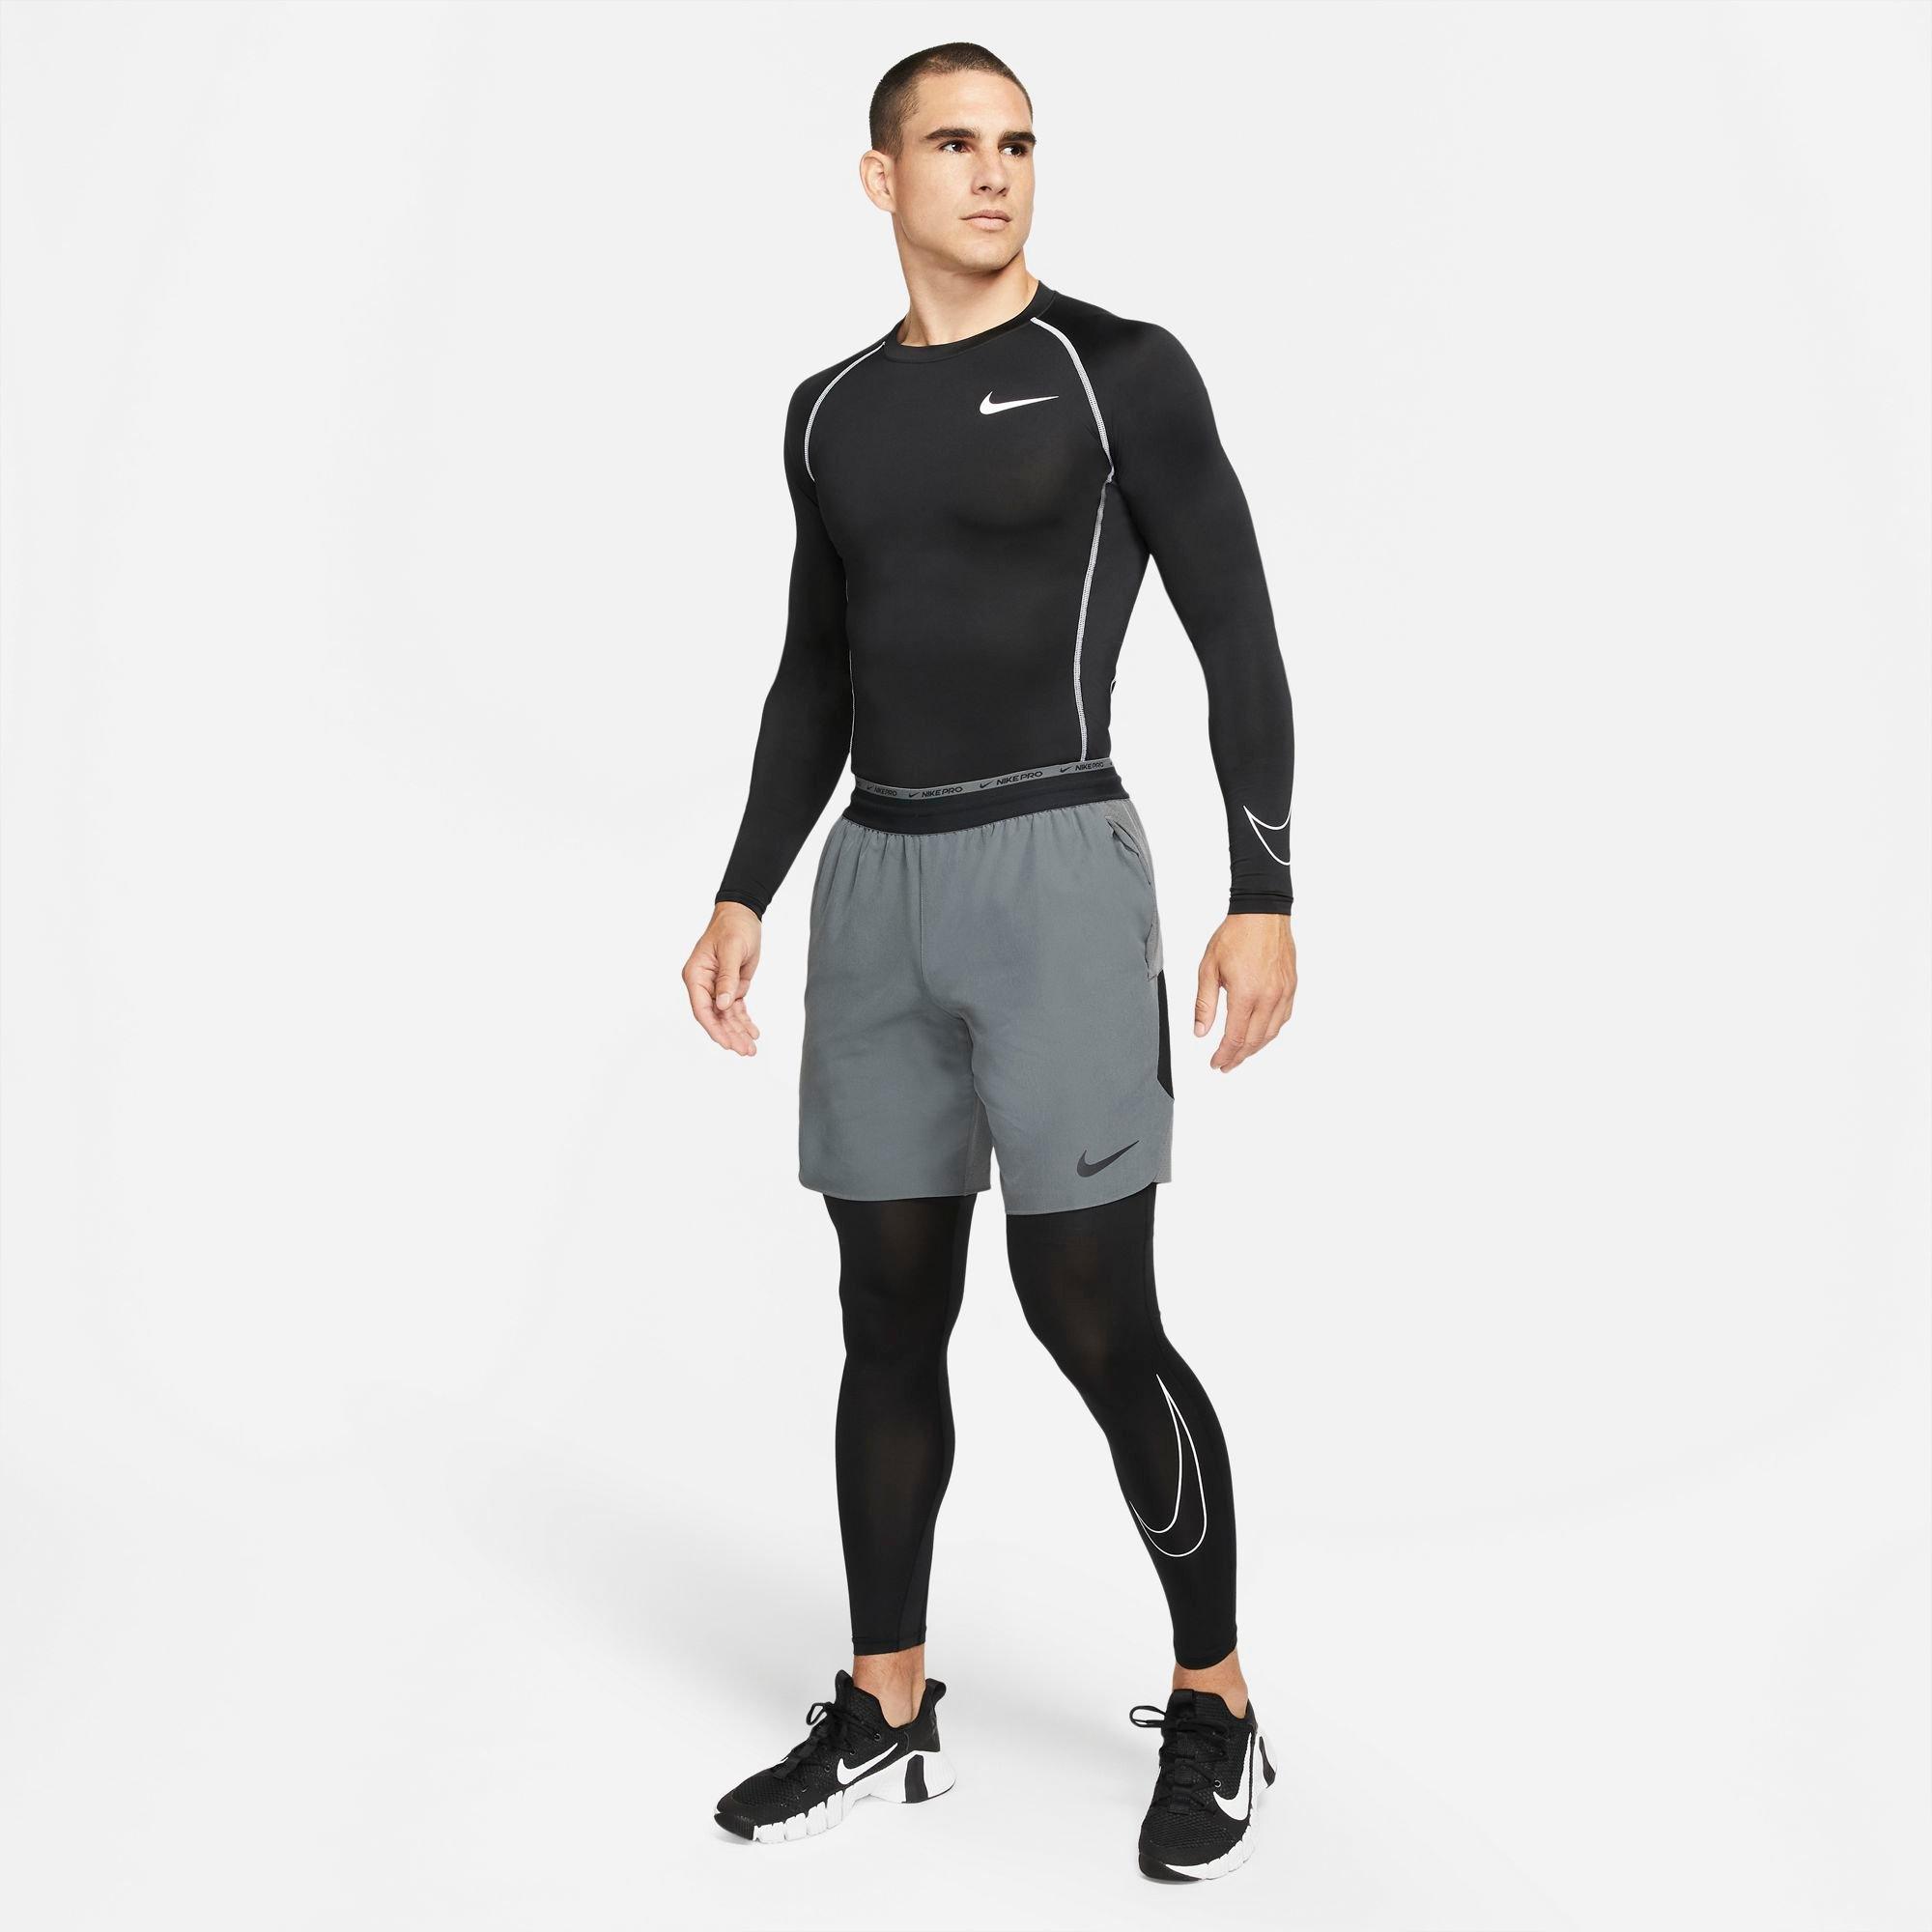 Nike Men's Pro Compression "Black" Leggings